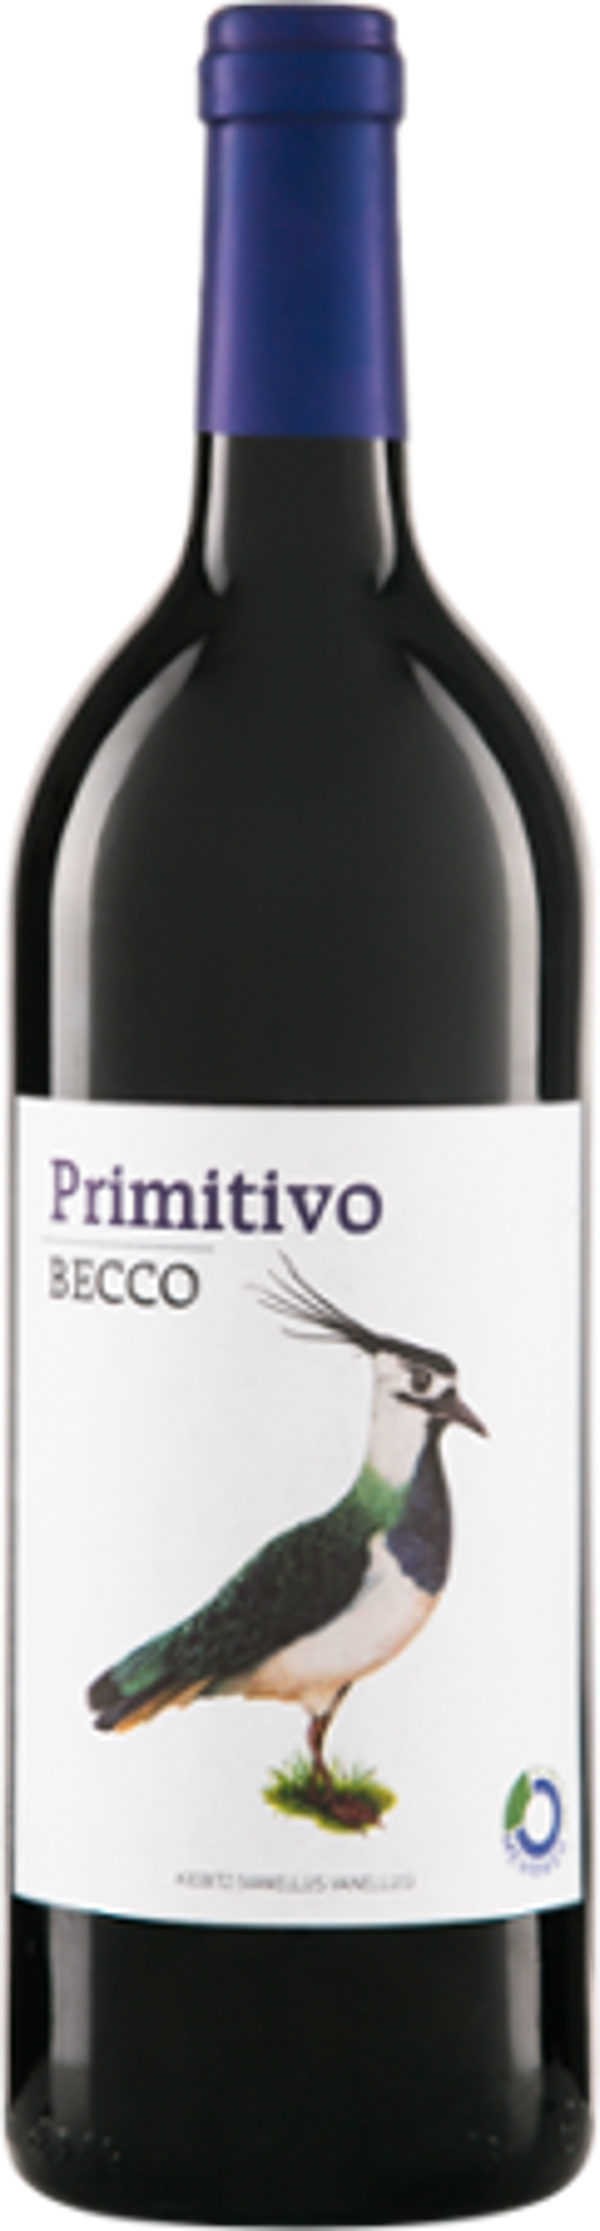 Produktfoto zu BECCO Primitivo IGT Puglia